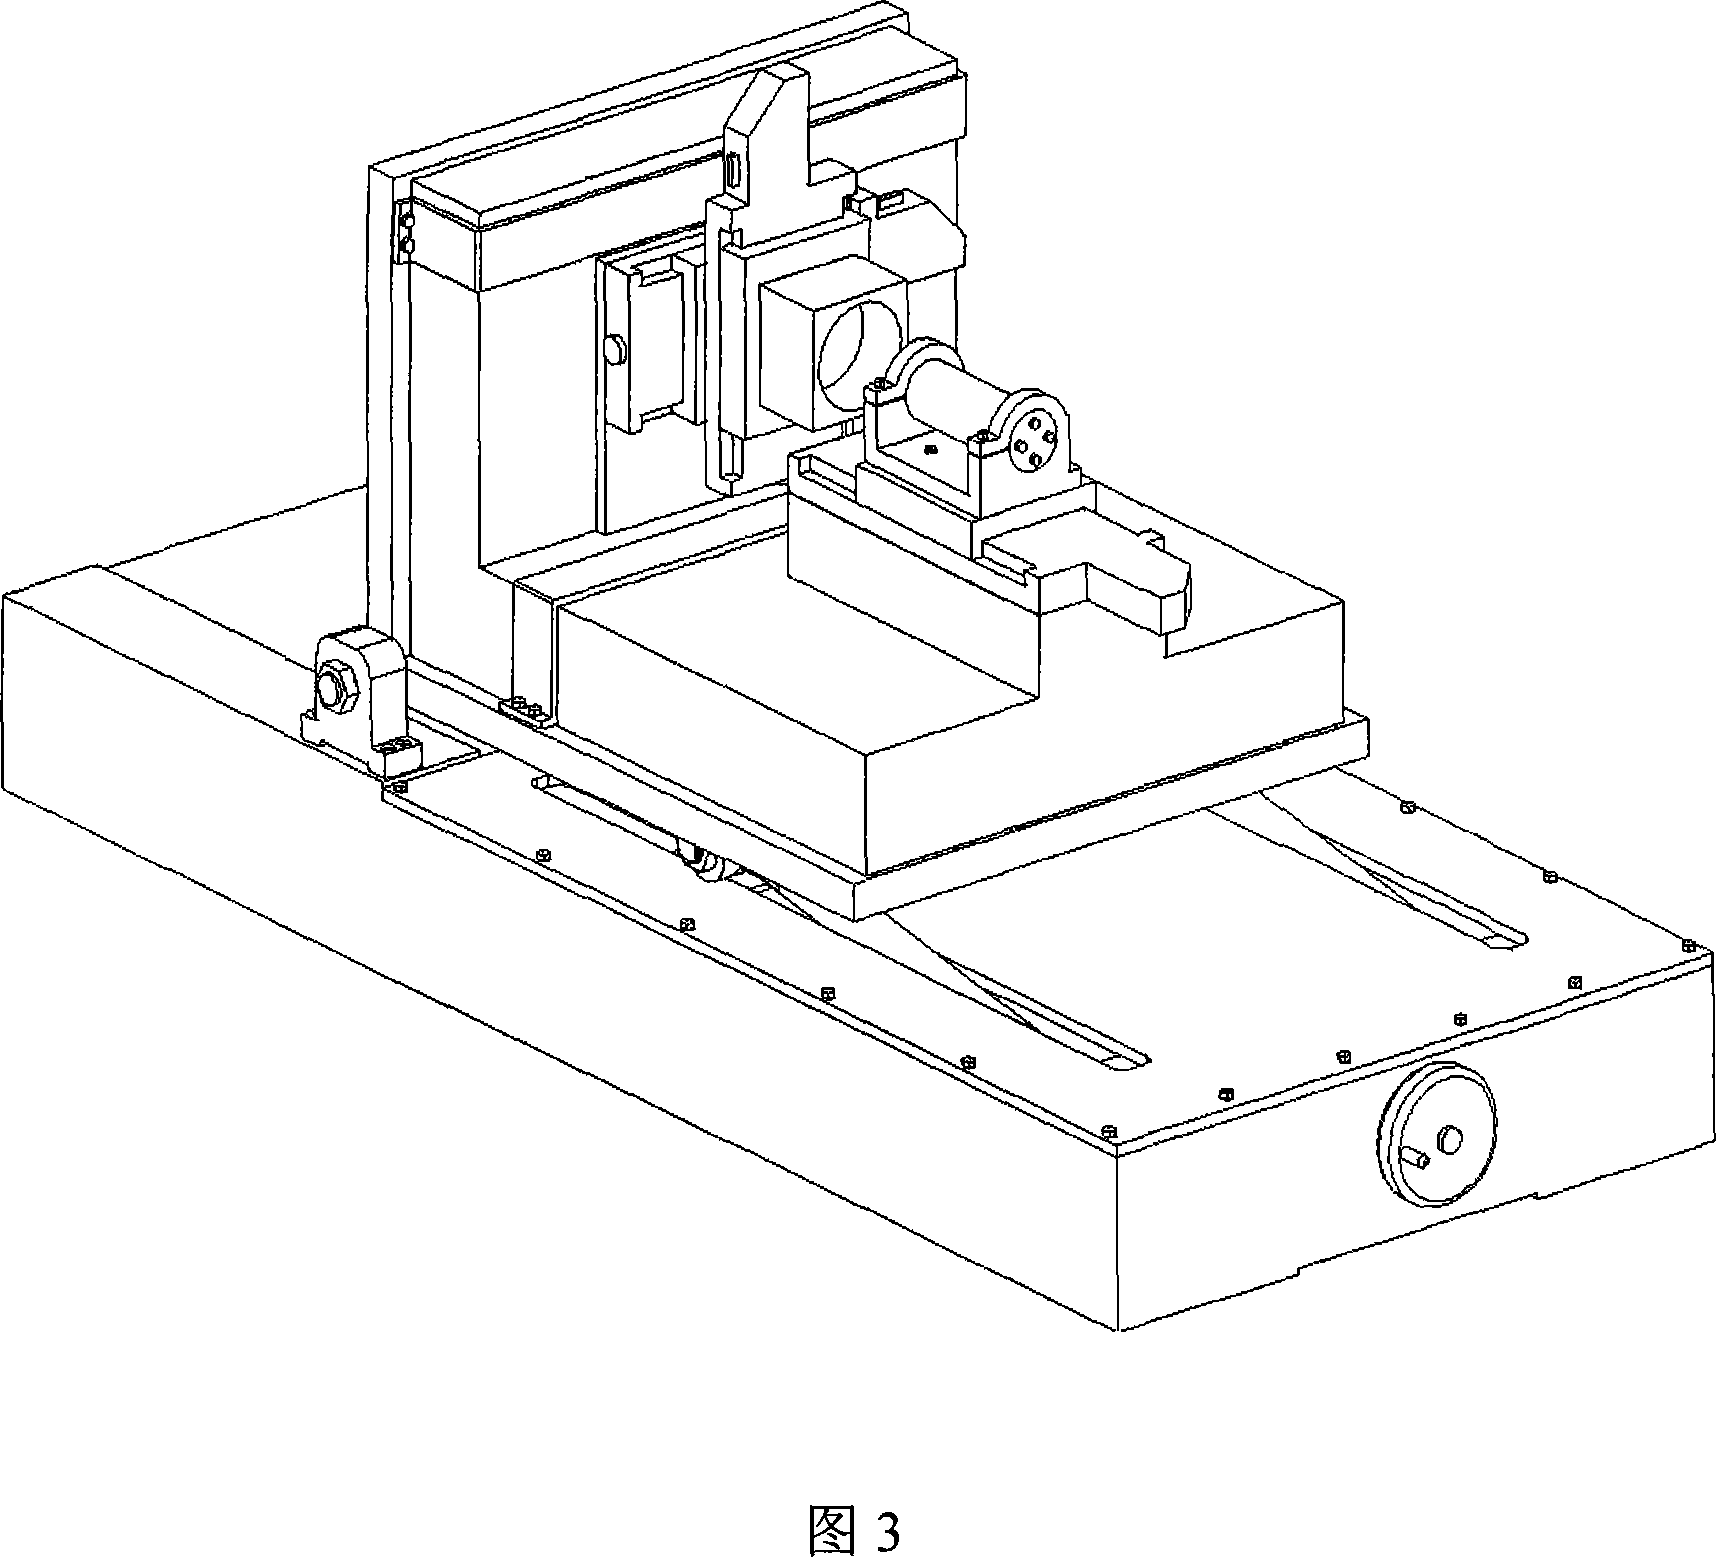 Random working angle precision electrolytic machining method and machine tool